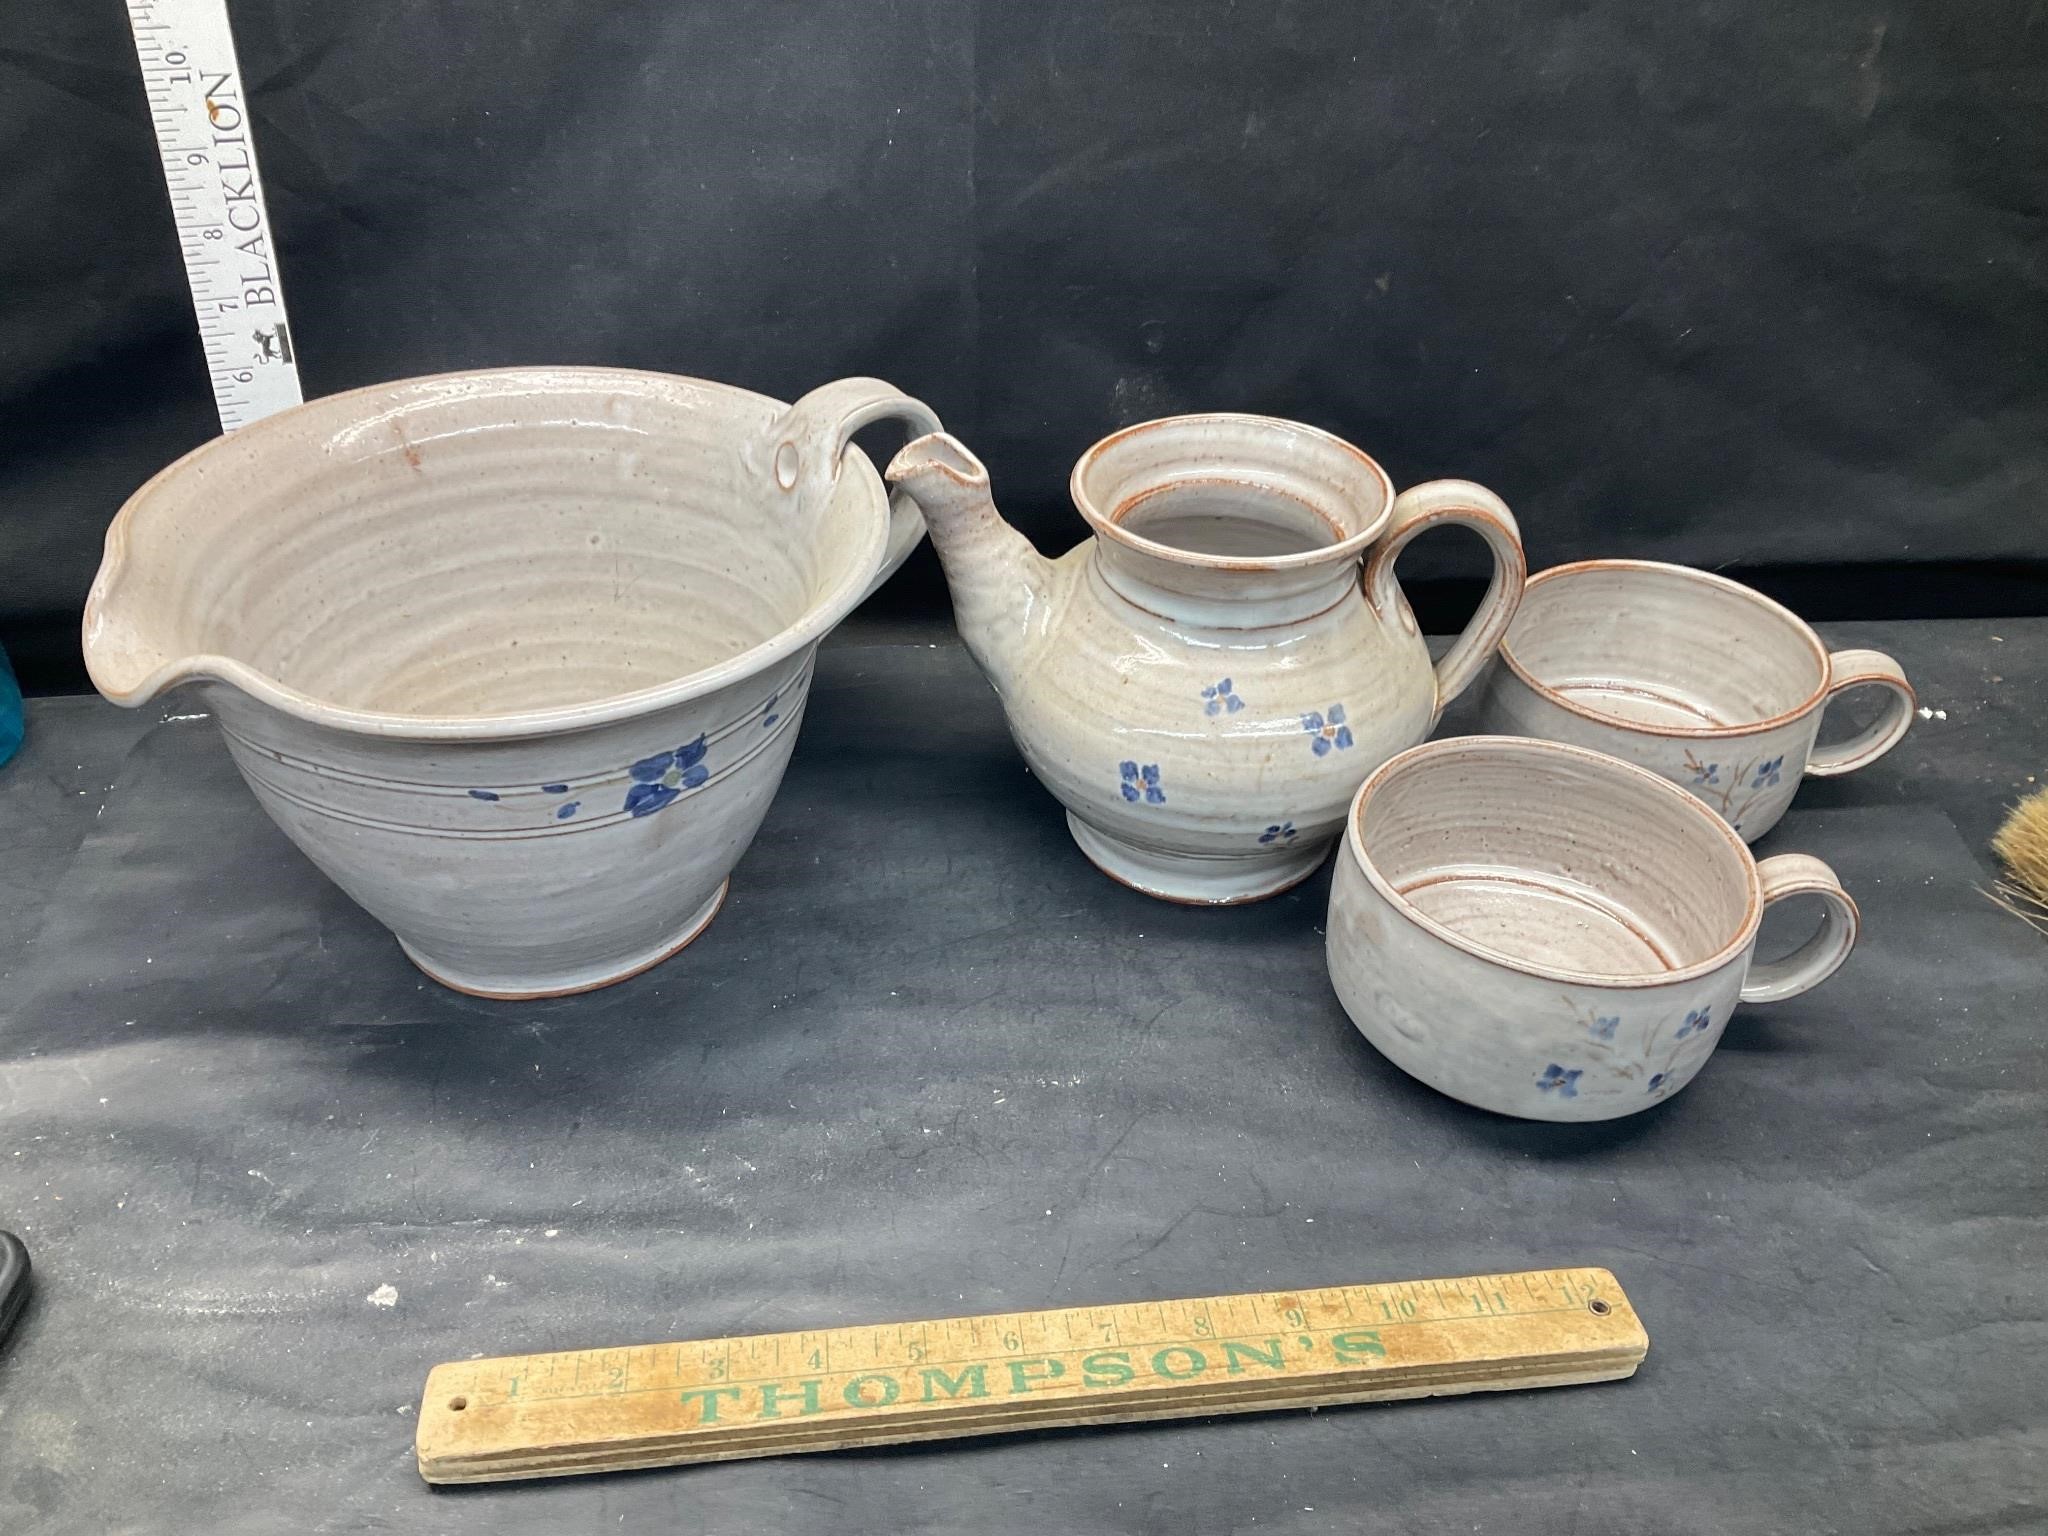 4 pcs of Owen’s pottery